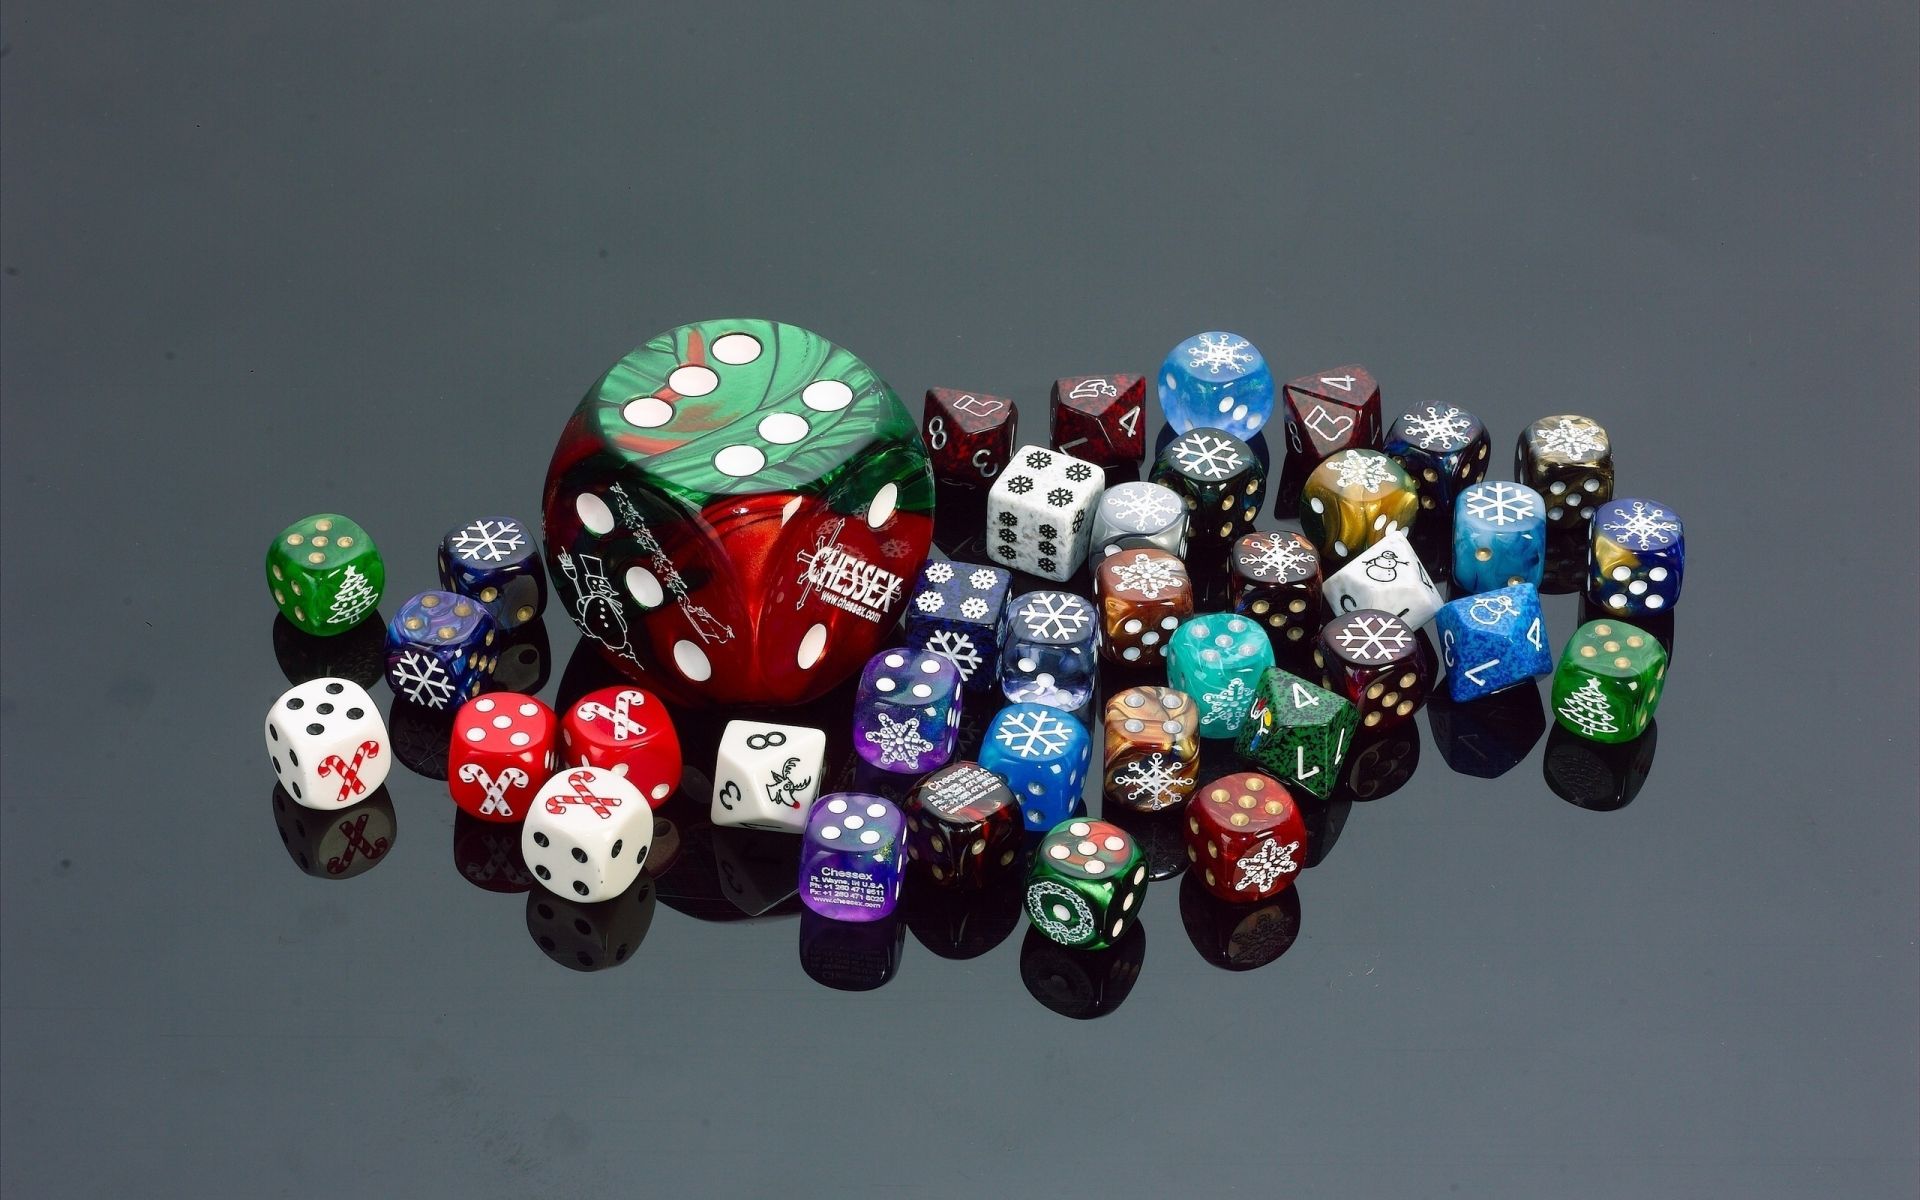 geometric shapes risk casino chance gambling dice luck